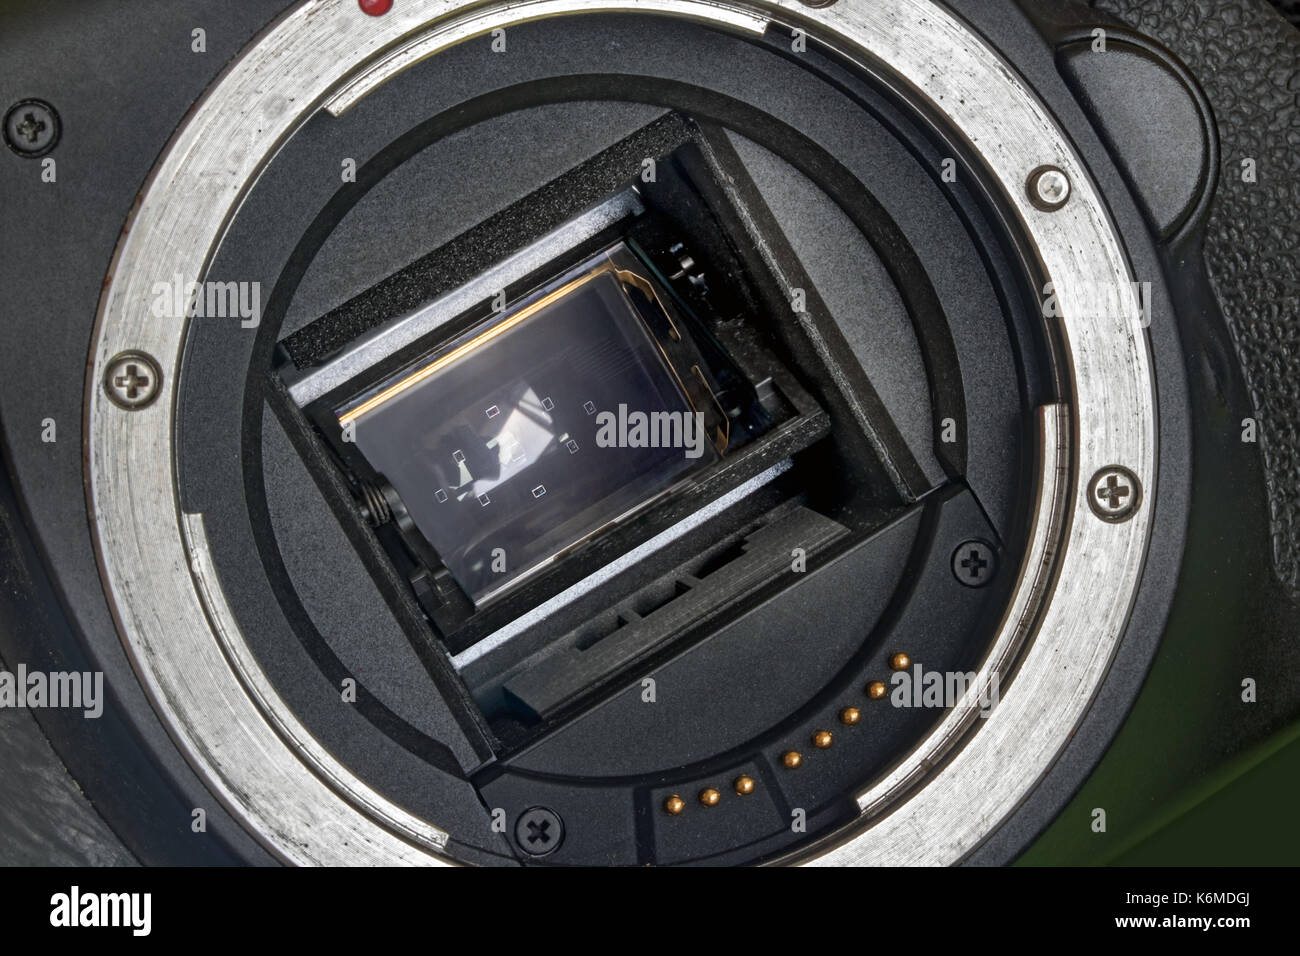 Digitale Kamera mit APS-C Sensor und Objektiv. Kamera sensor CCD- oder CMOS-closeup. Digitale spiegellosen Kamera APS-C-CMOS-Sensor und Objektiv Bajonett. Stockfoto